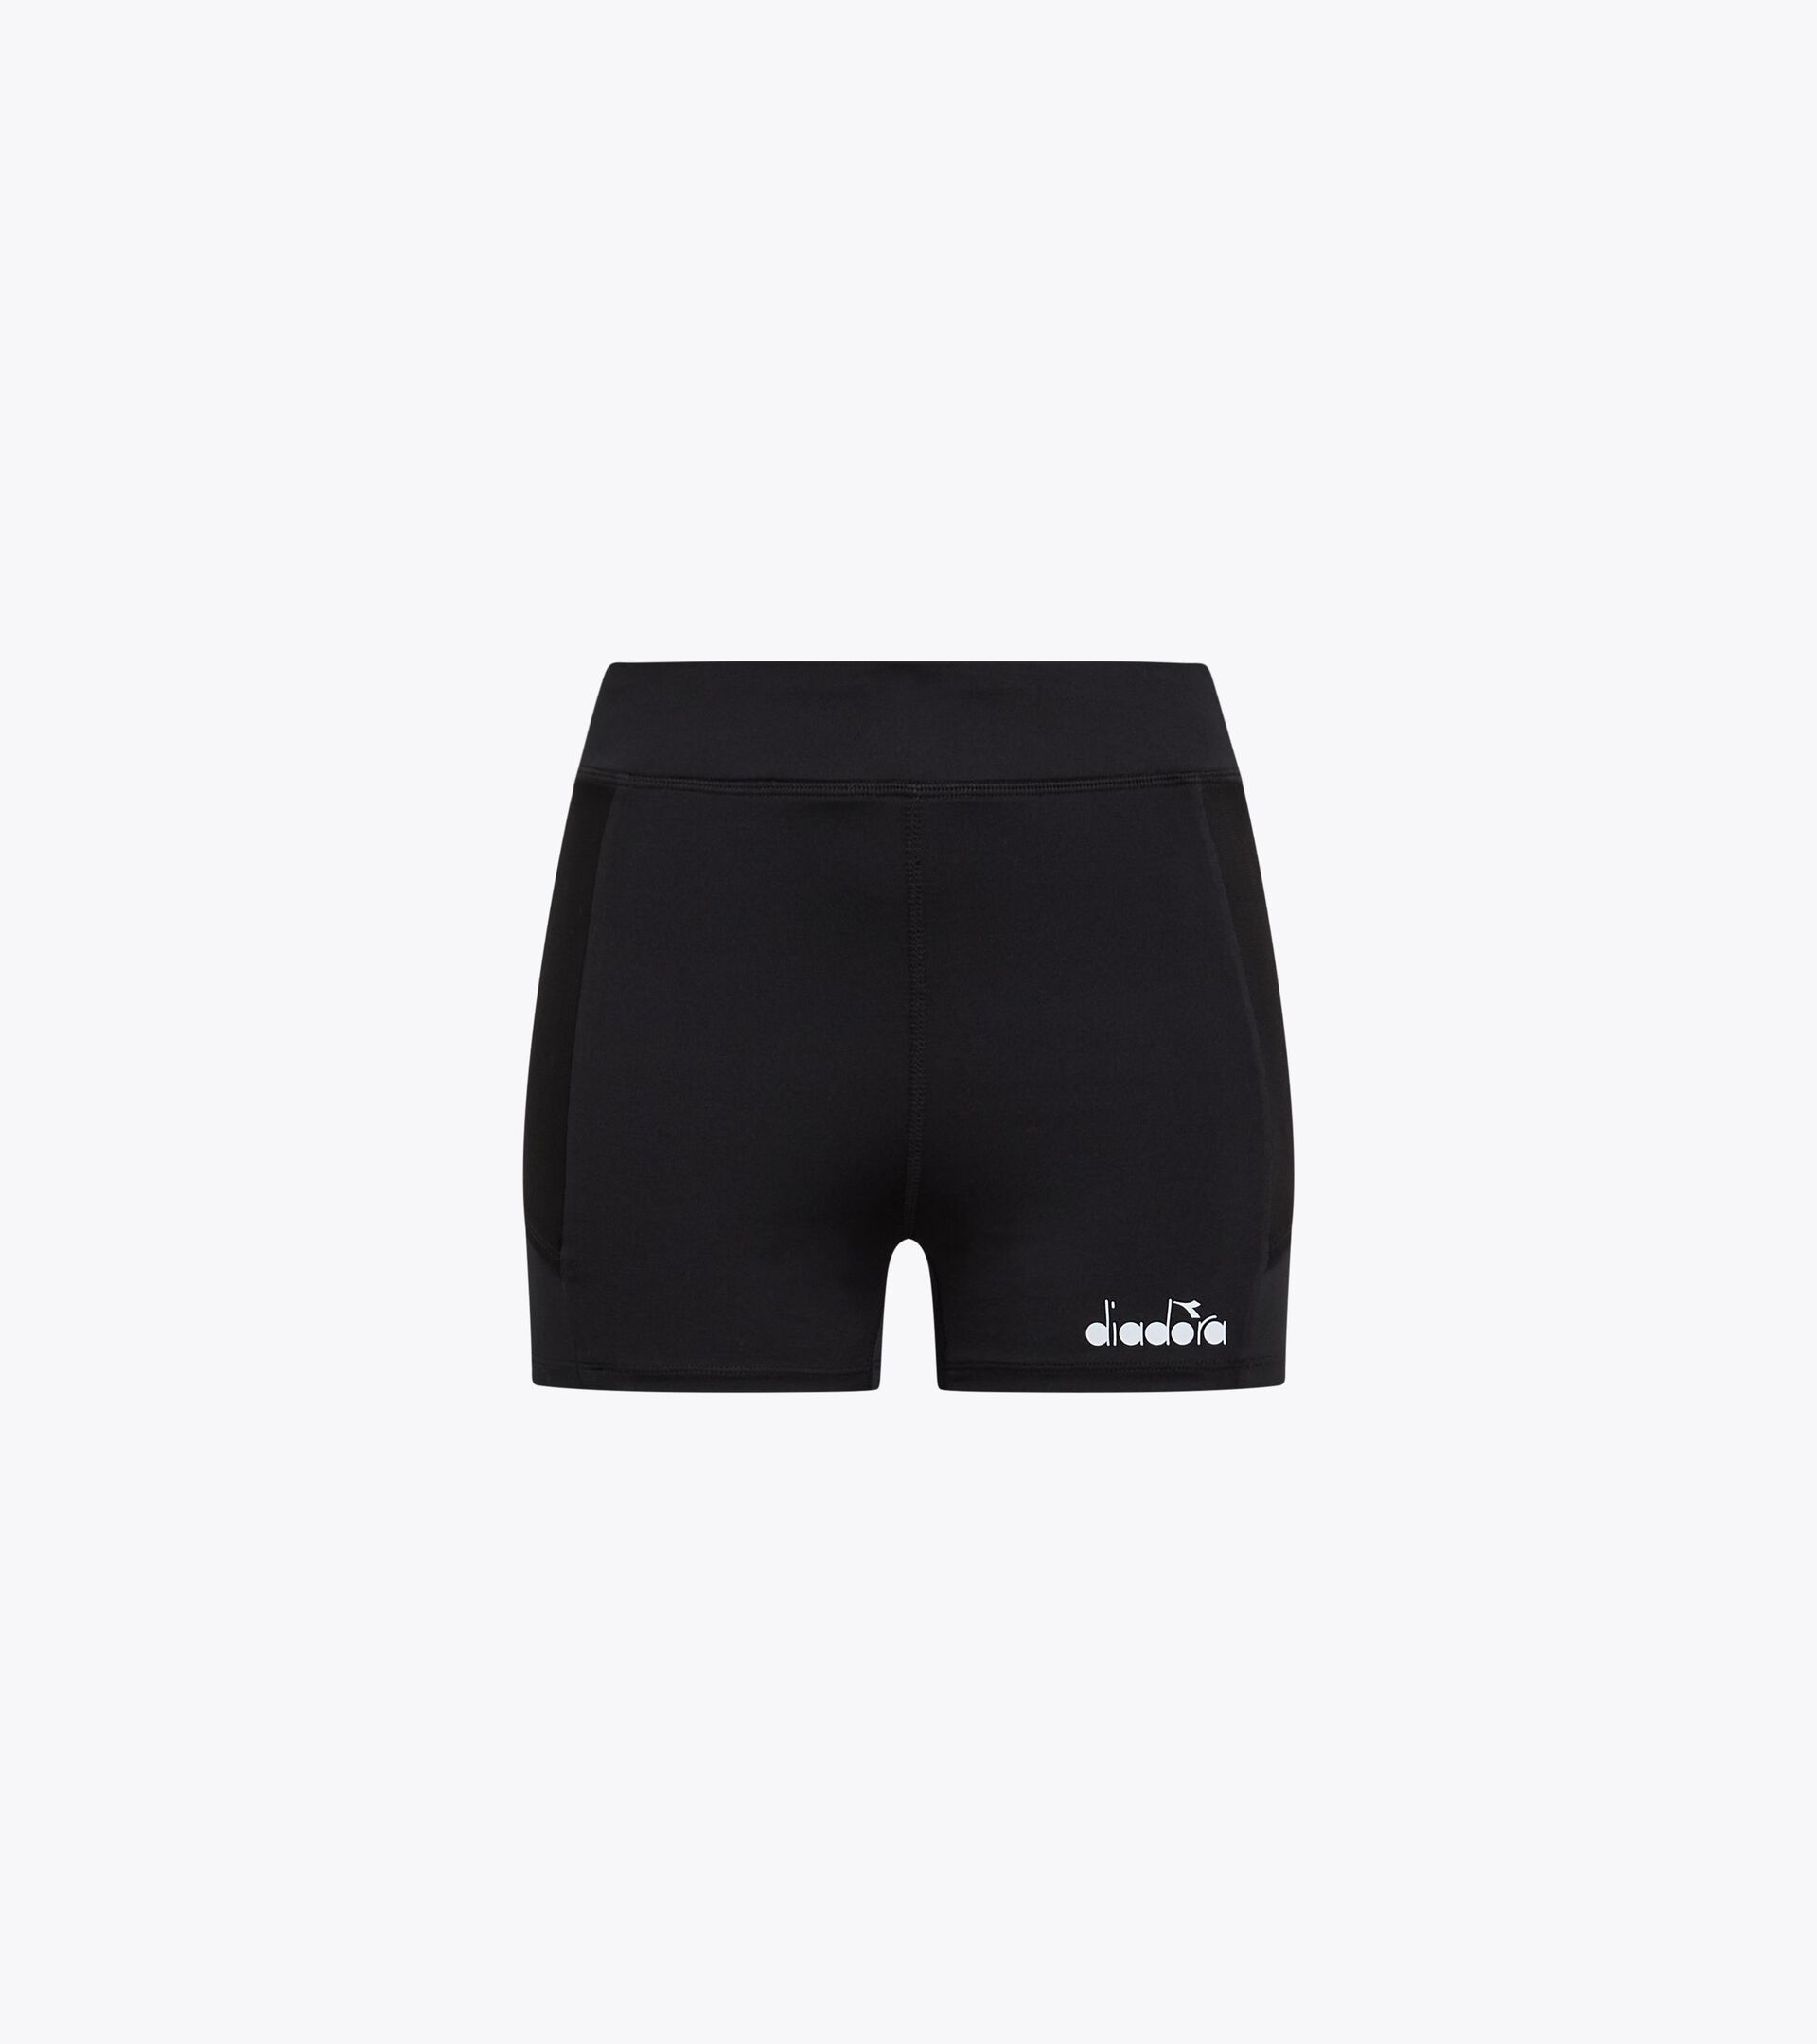 Tennis shorts - Women’s
 L. SHORT TIGHTS POCKETS BLACK - Diadora